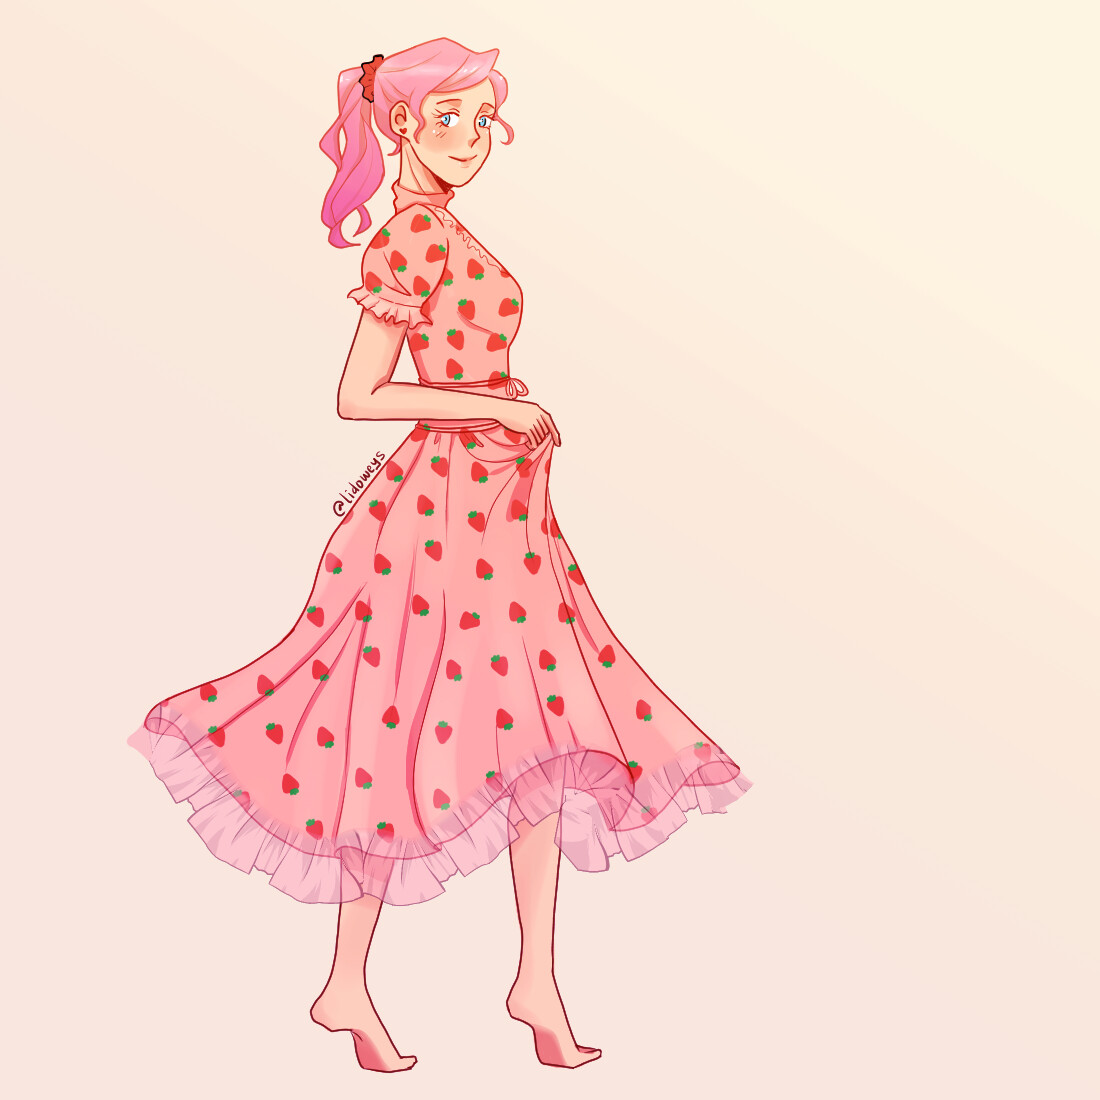 ArtStation - The Famous Strawberry Dress